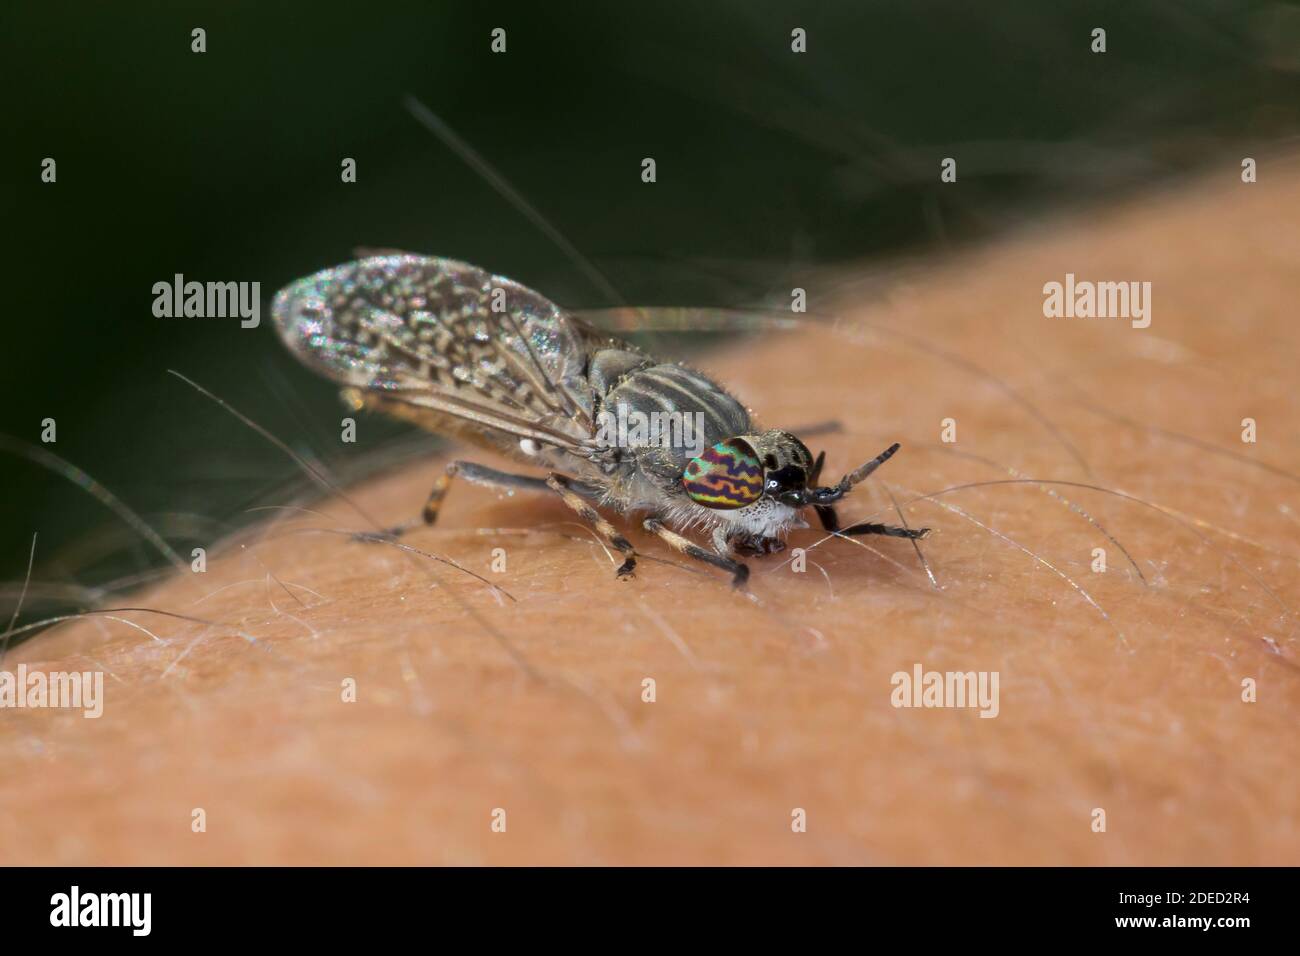 Common Horse Fly, Horse Fly, Notch-Horned Clig Fly, clig-fly, clig (Haematopota pluvialis), femmina che pungono in un braccio umano, Germania Foto Stock